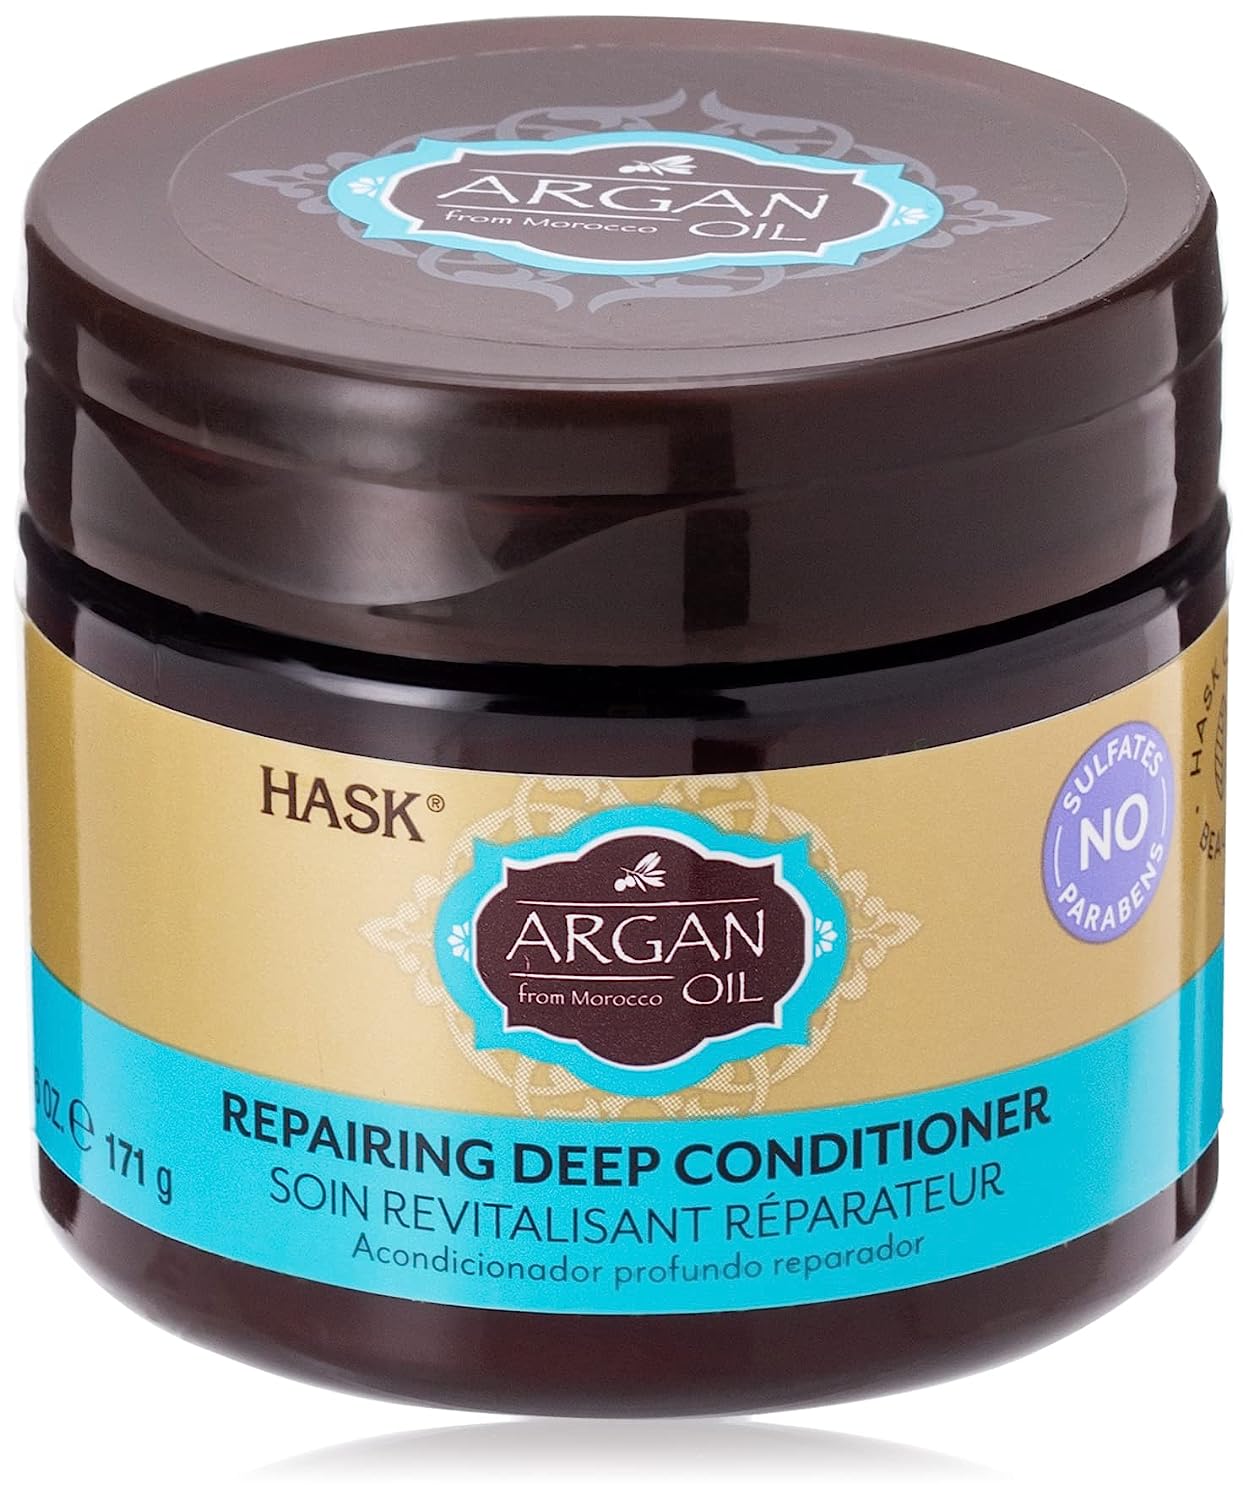 HASK ARGAN OIL Repairing Deep Conditioner Treatments [...]